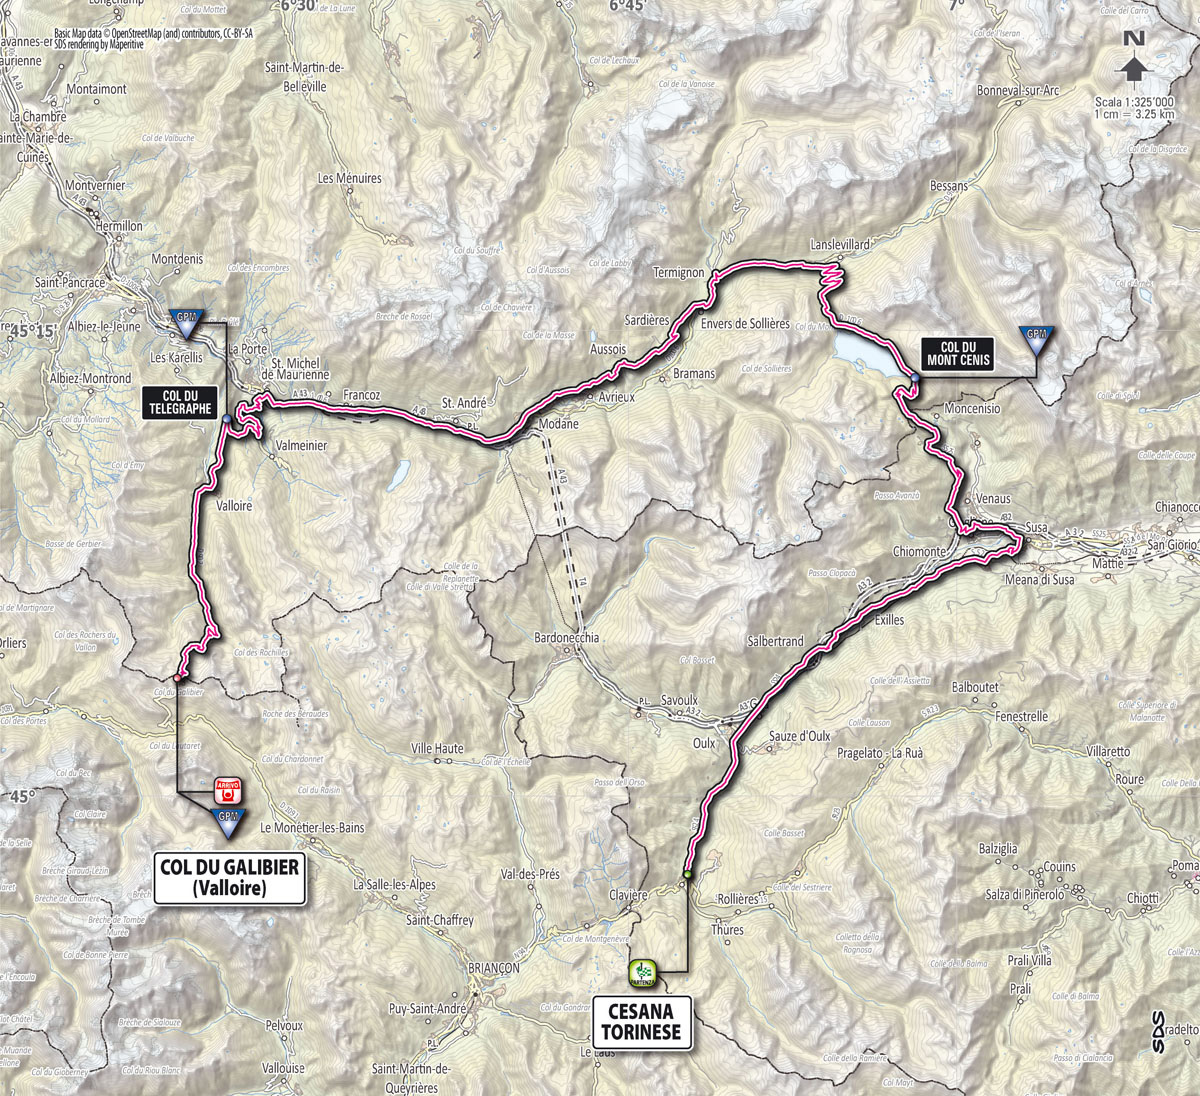 Giro d'Italia 2013 stage 15 map